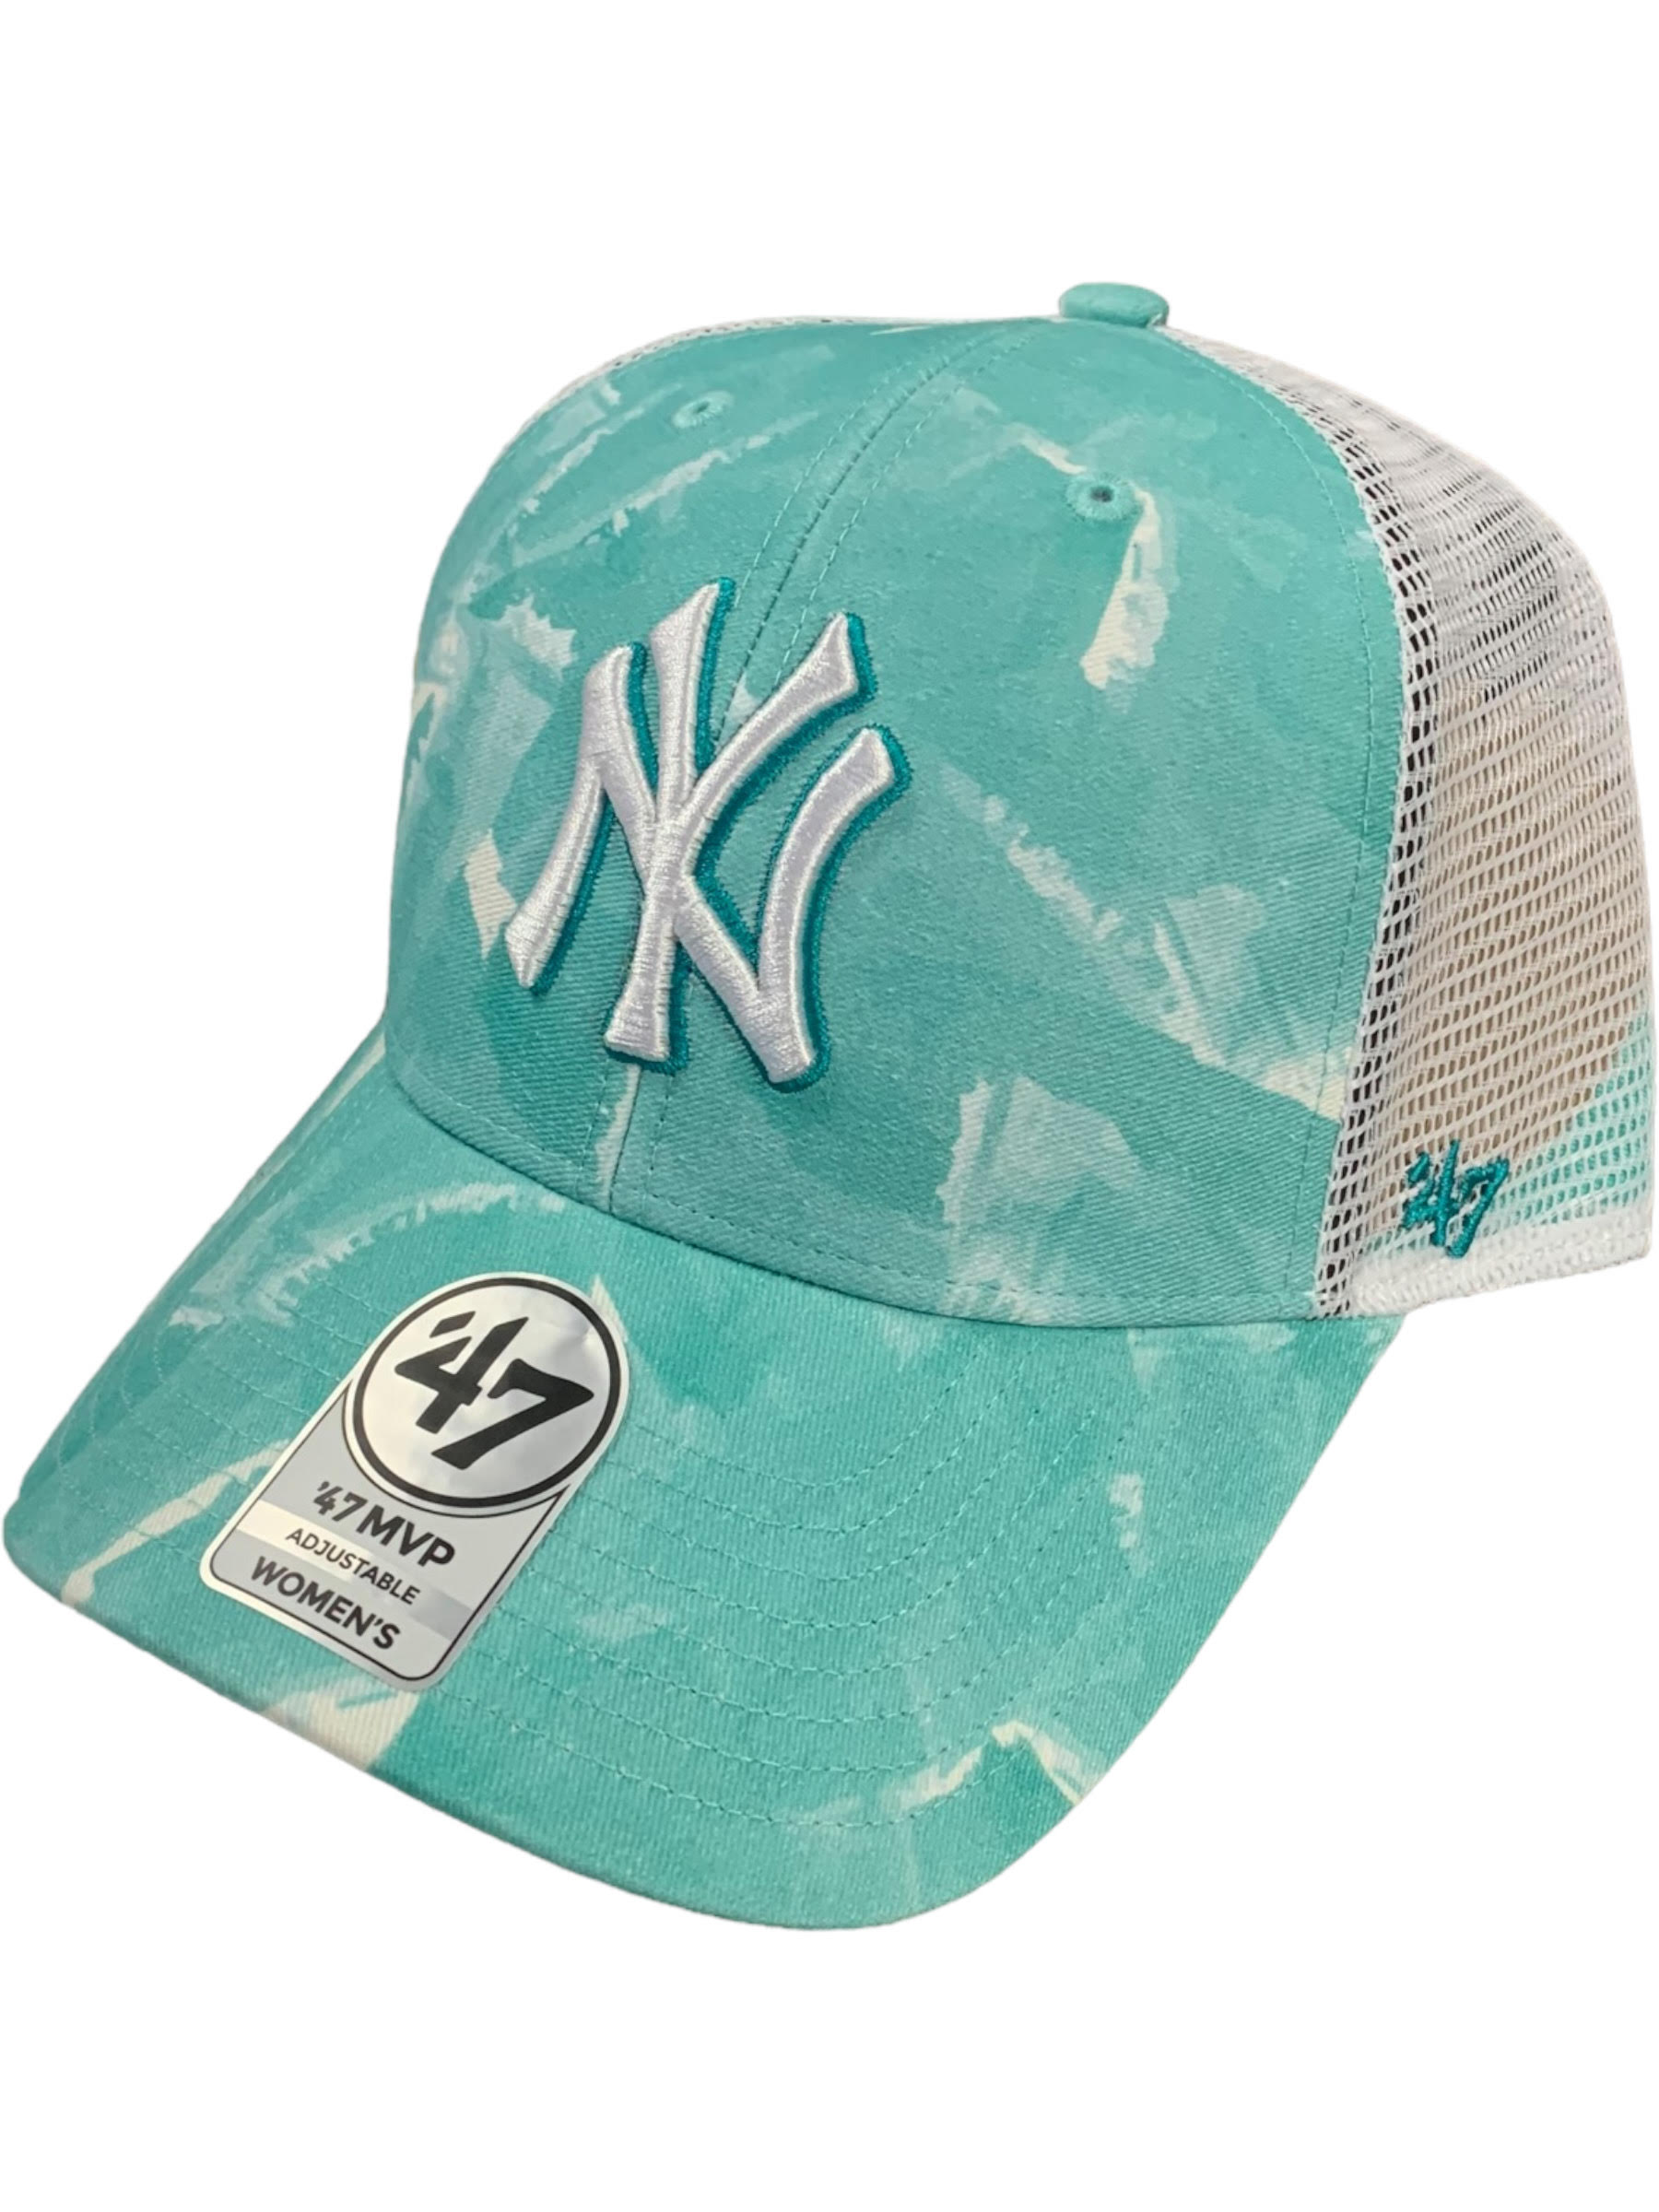 new york yankees cap blue